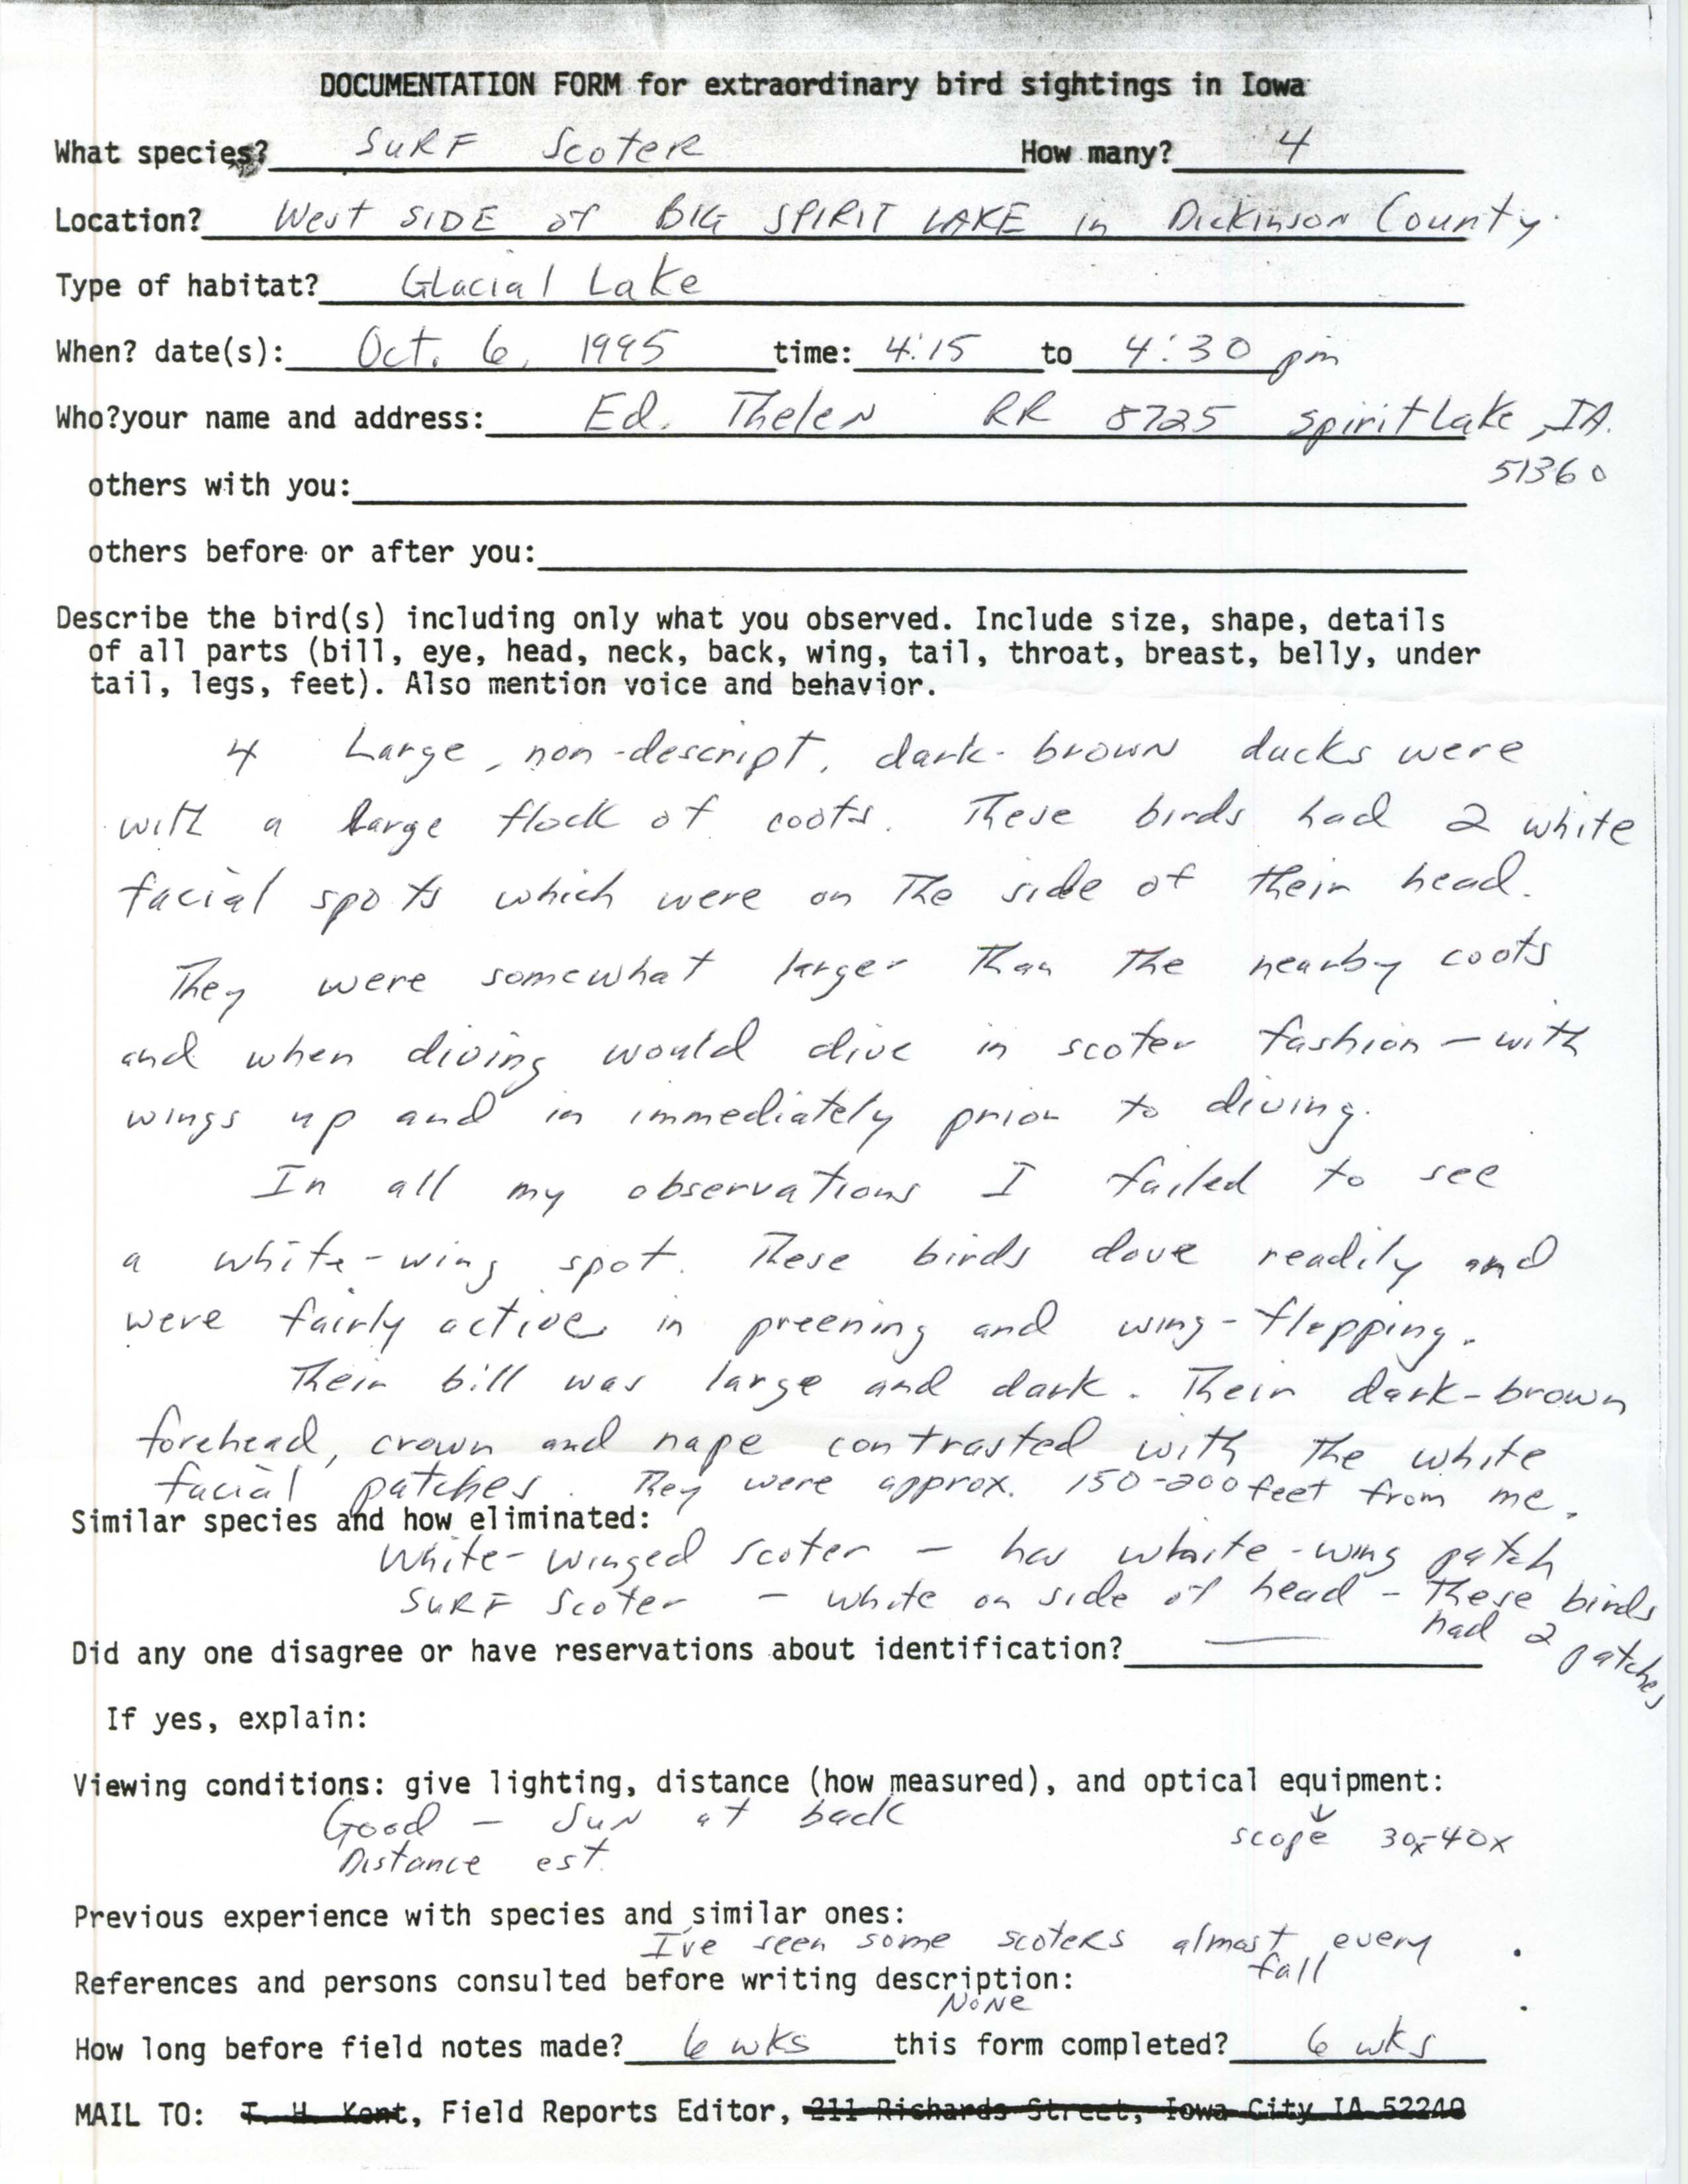 Rare bird documentation form for Surf Scoter at Big Spirit Lake, 1995